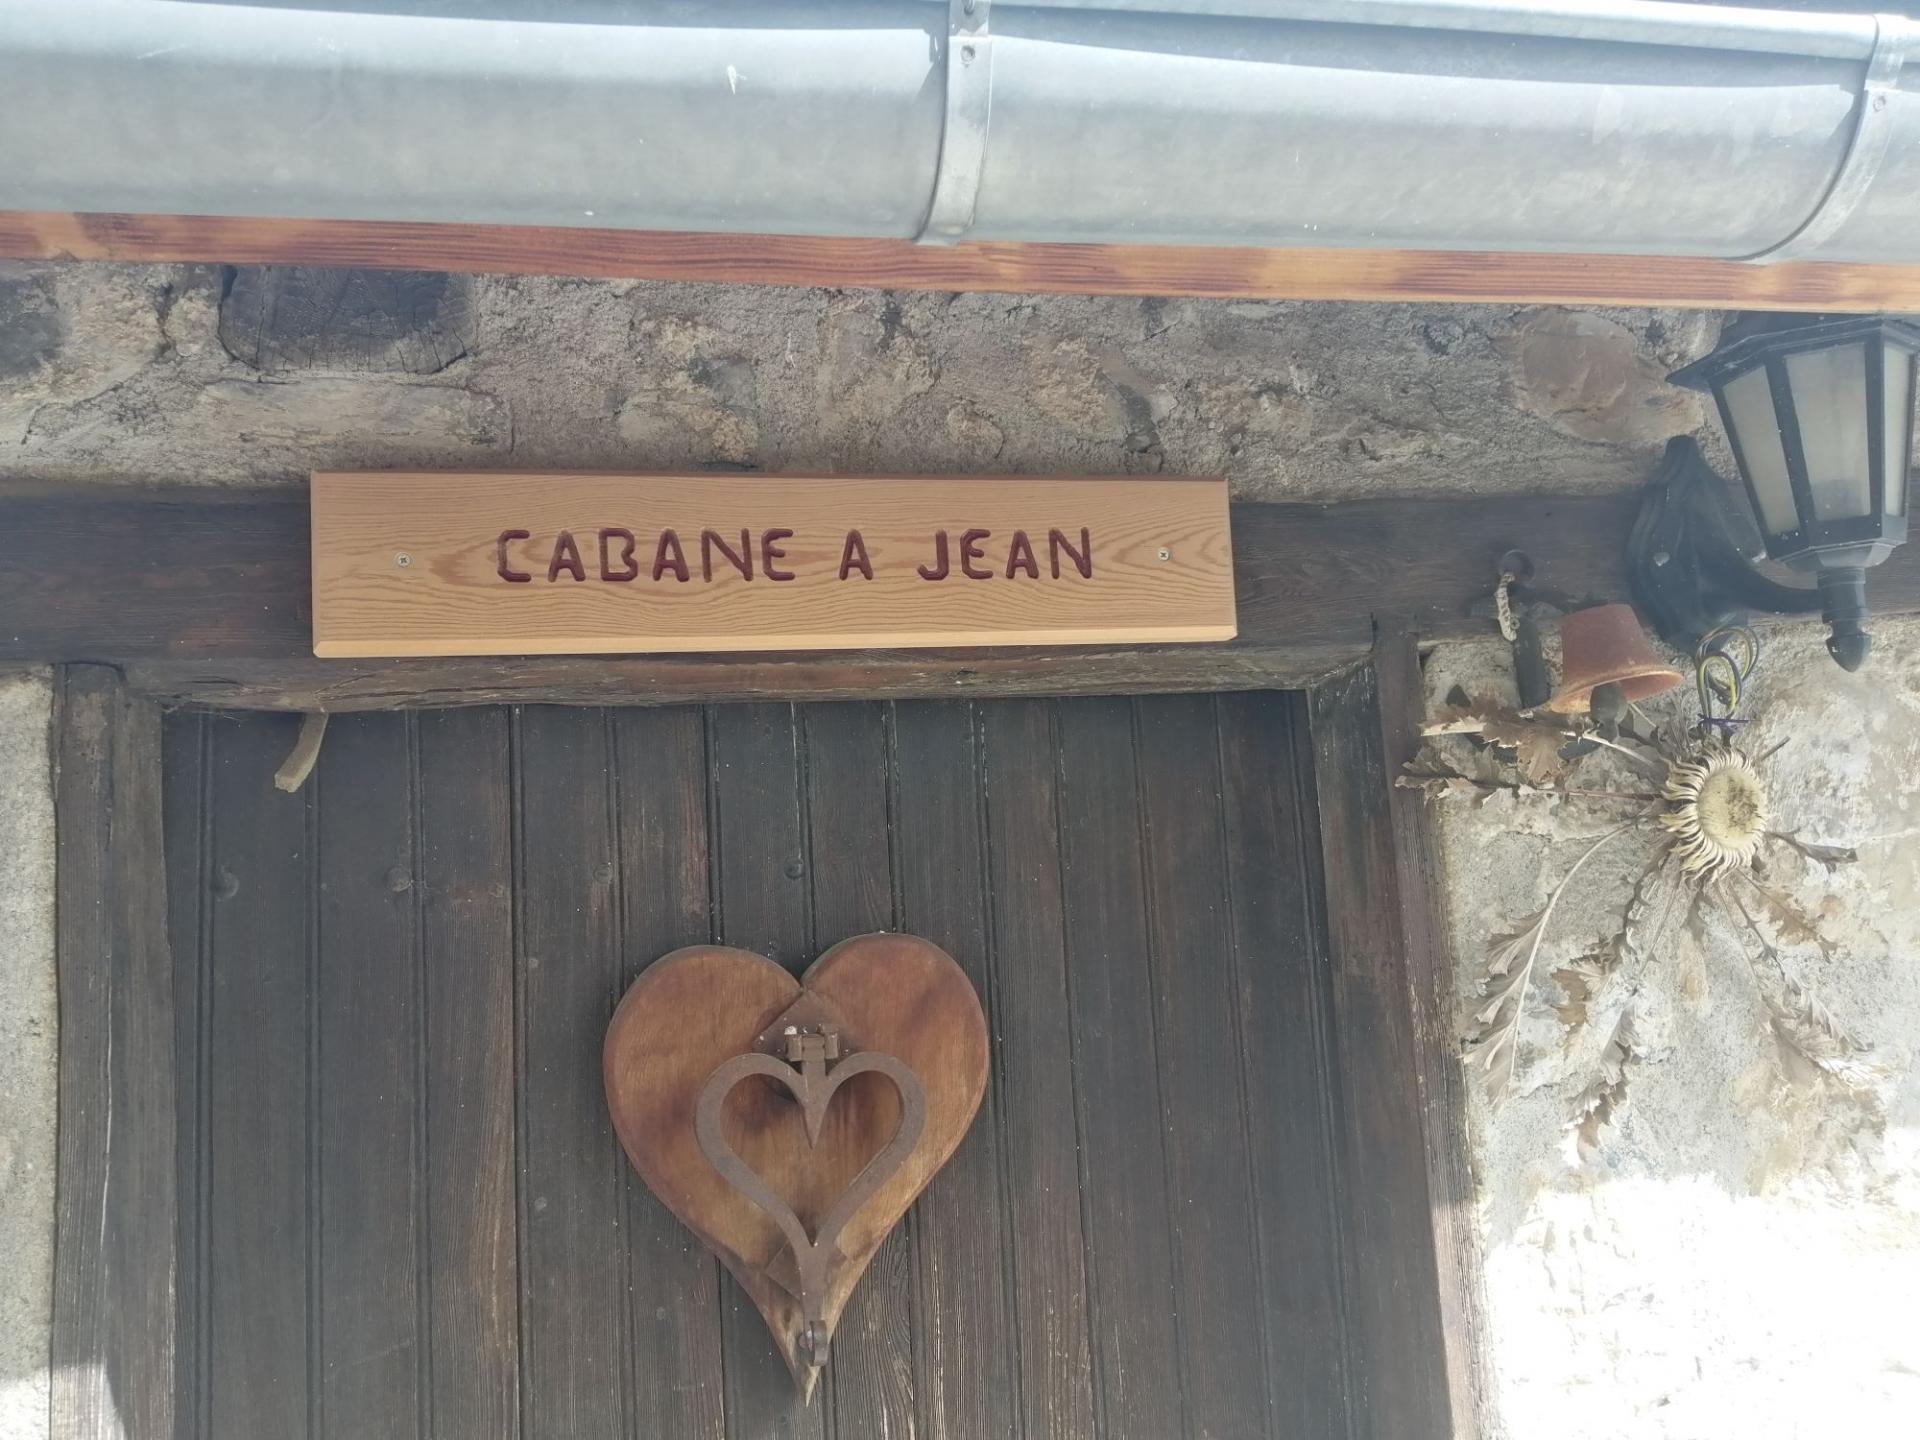 Cabane a jean